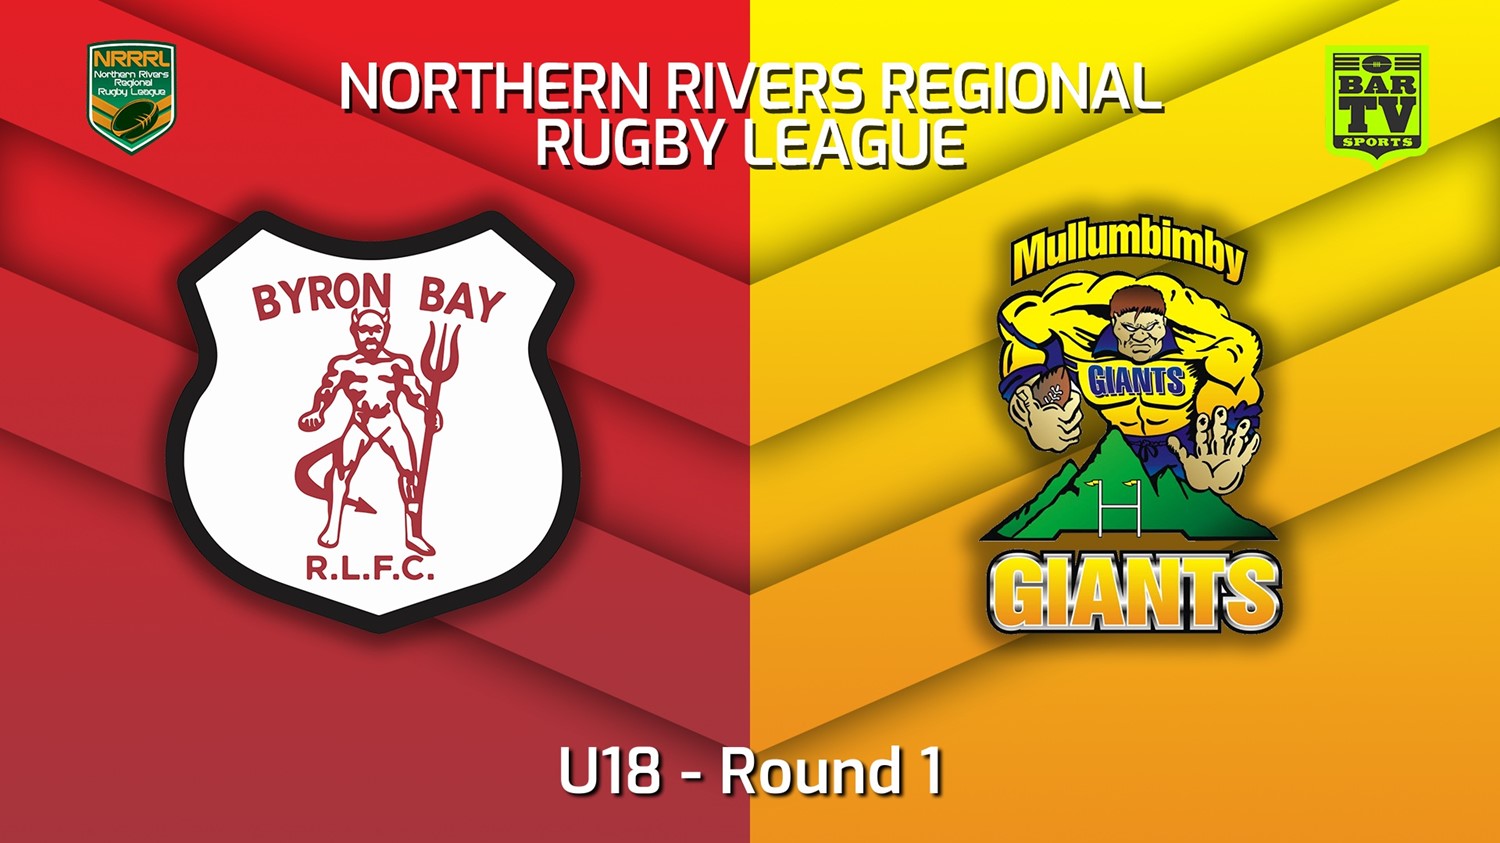 220423-Northern Rivers Round 1 - U18 - Byron Bay Red Devils v Mullumbimby Giants Minigame Slate Image